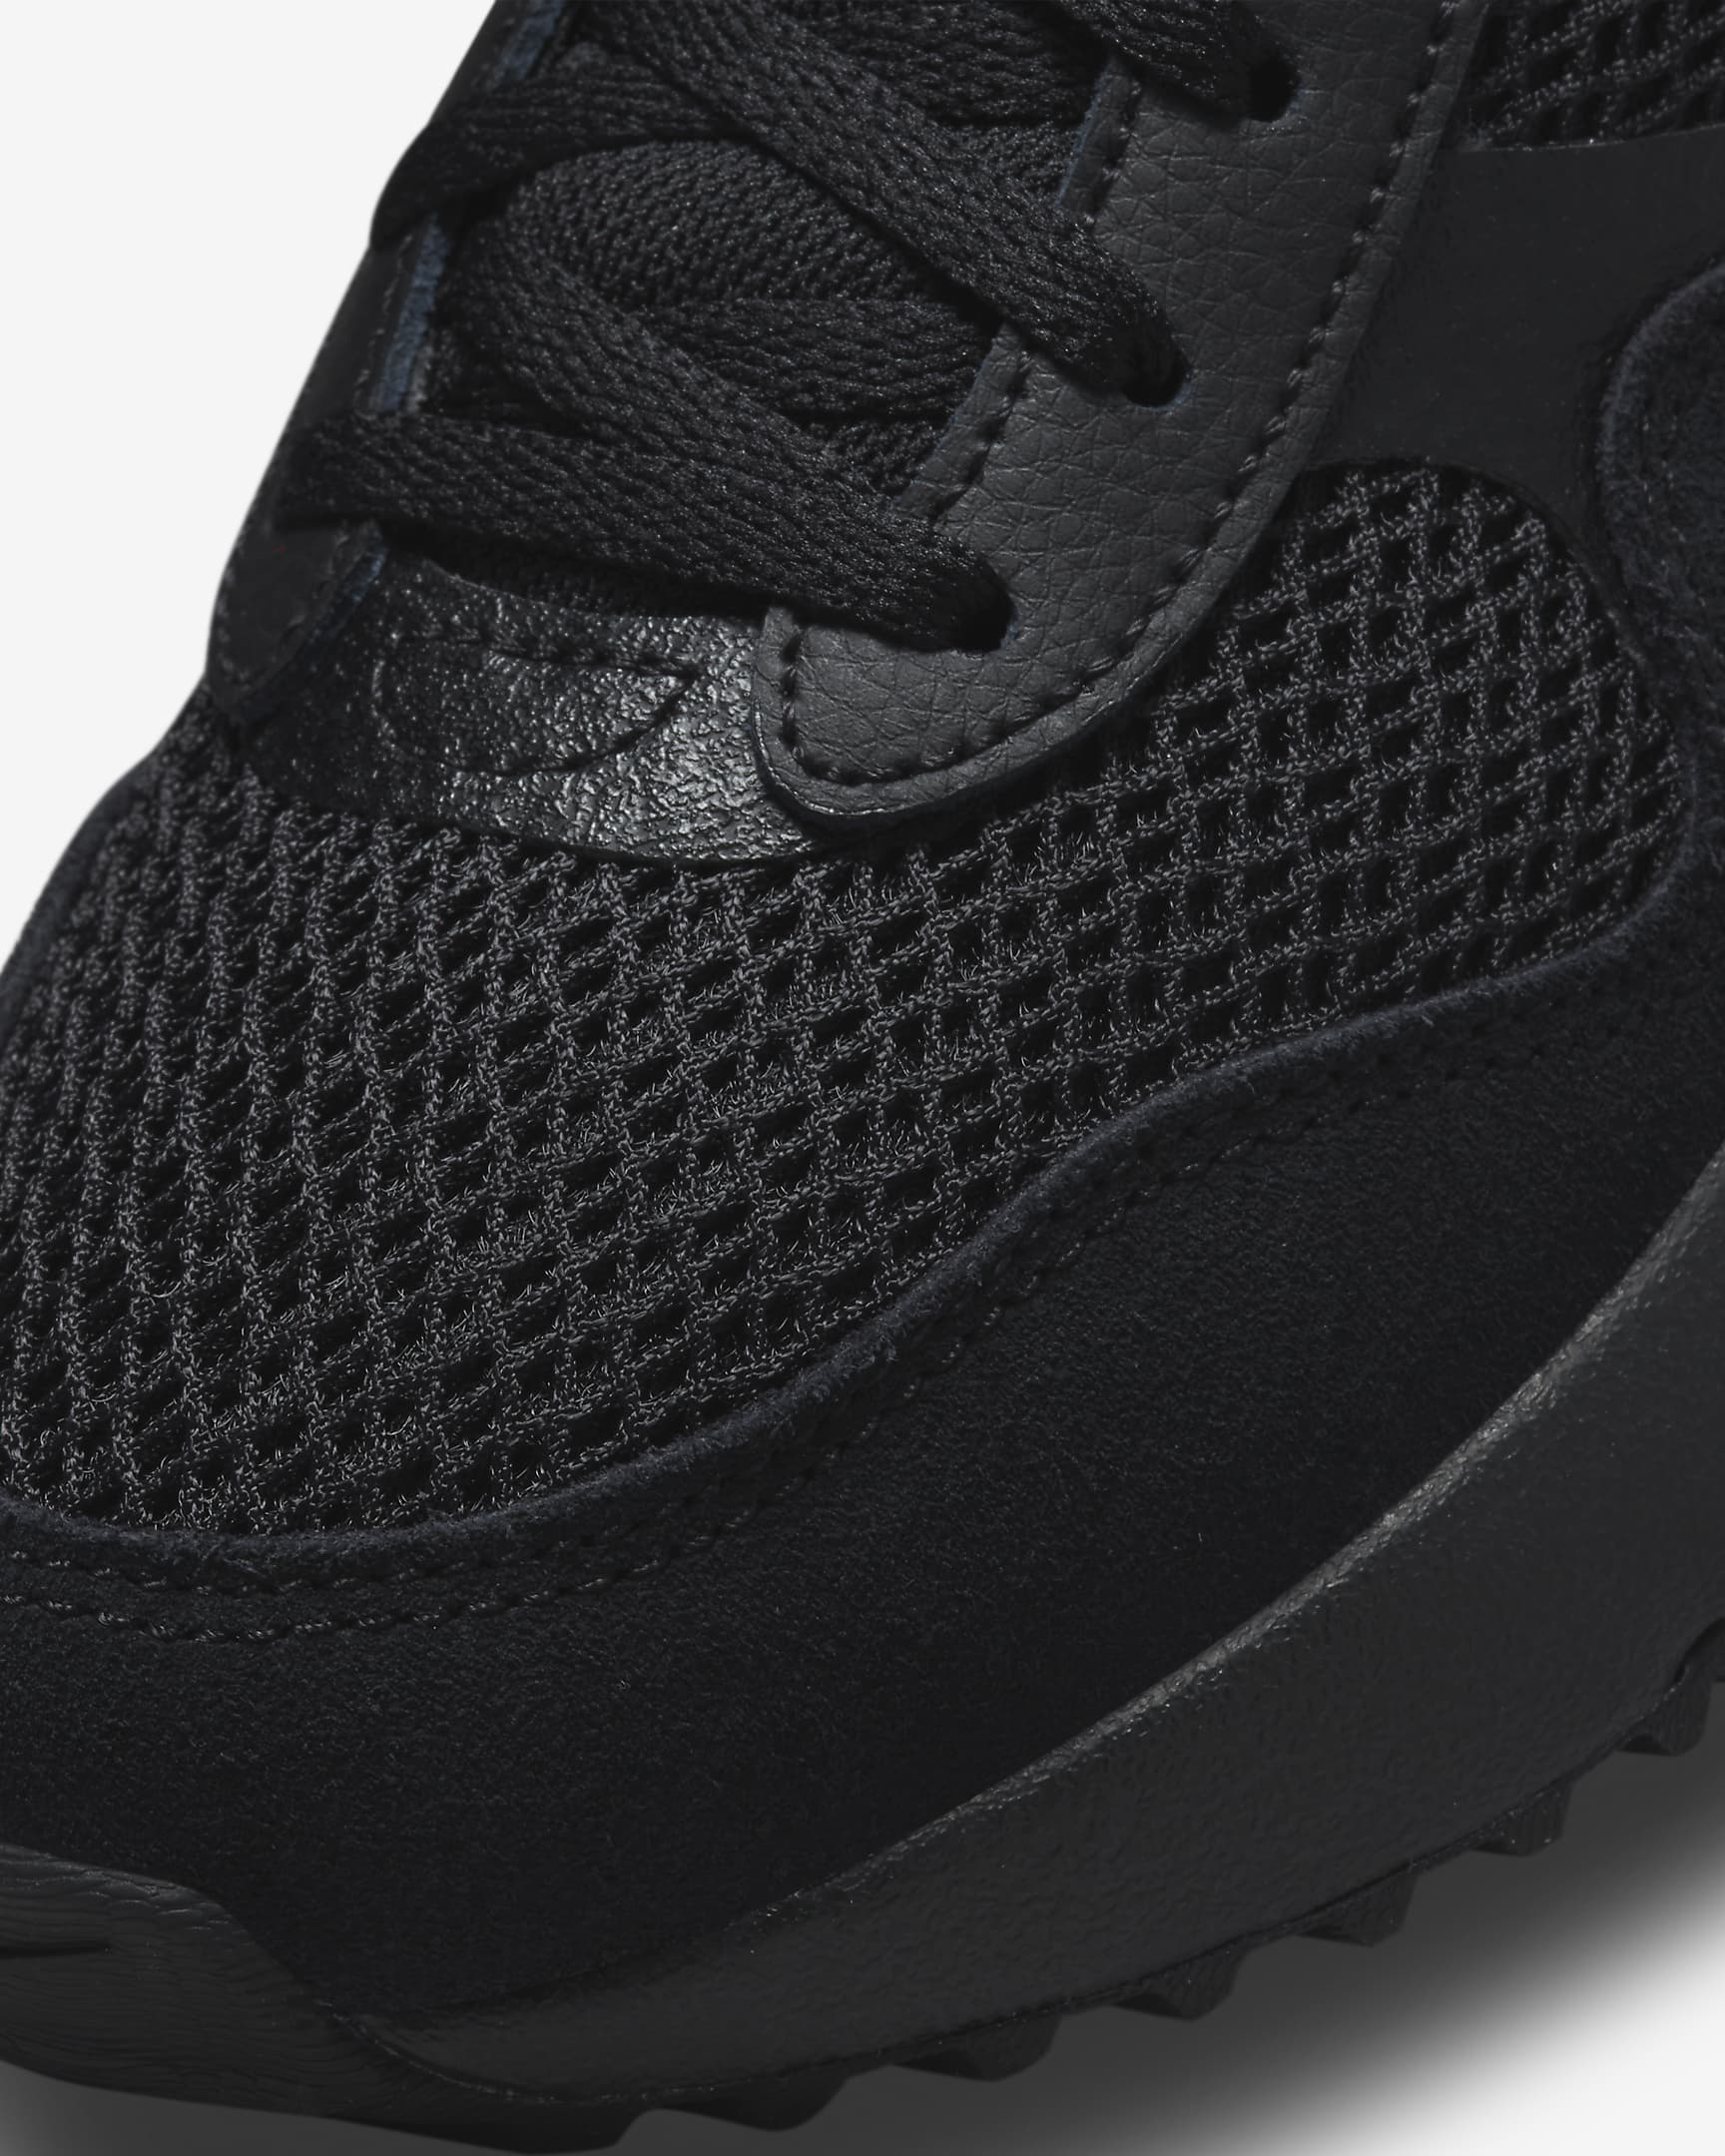 Nike Air Max SYSTM Older Kids' Shoes - Black/Black/Anthracite